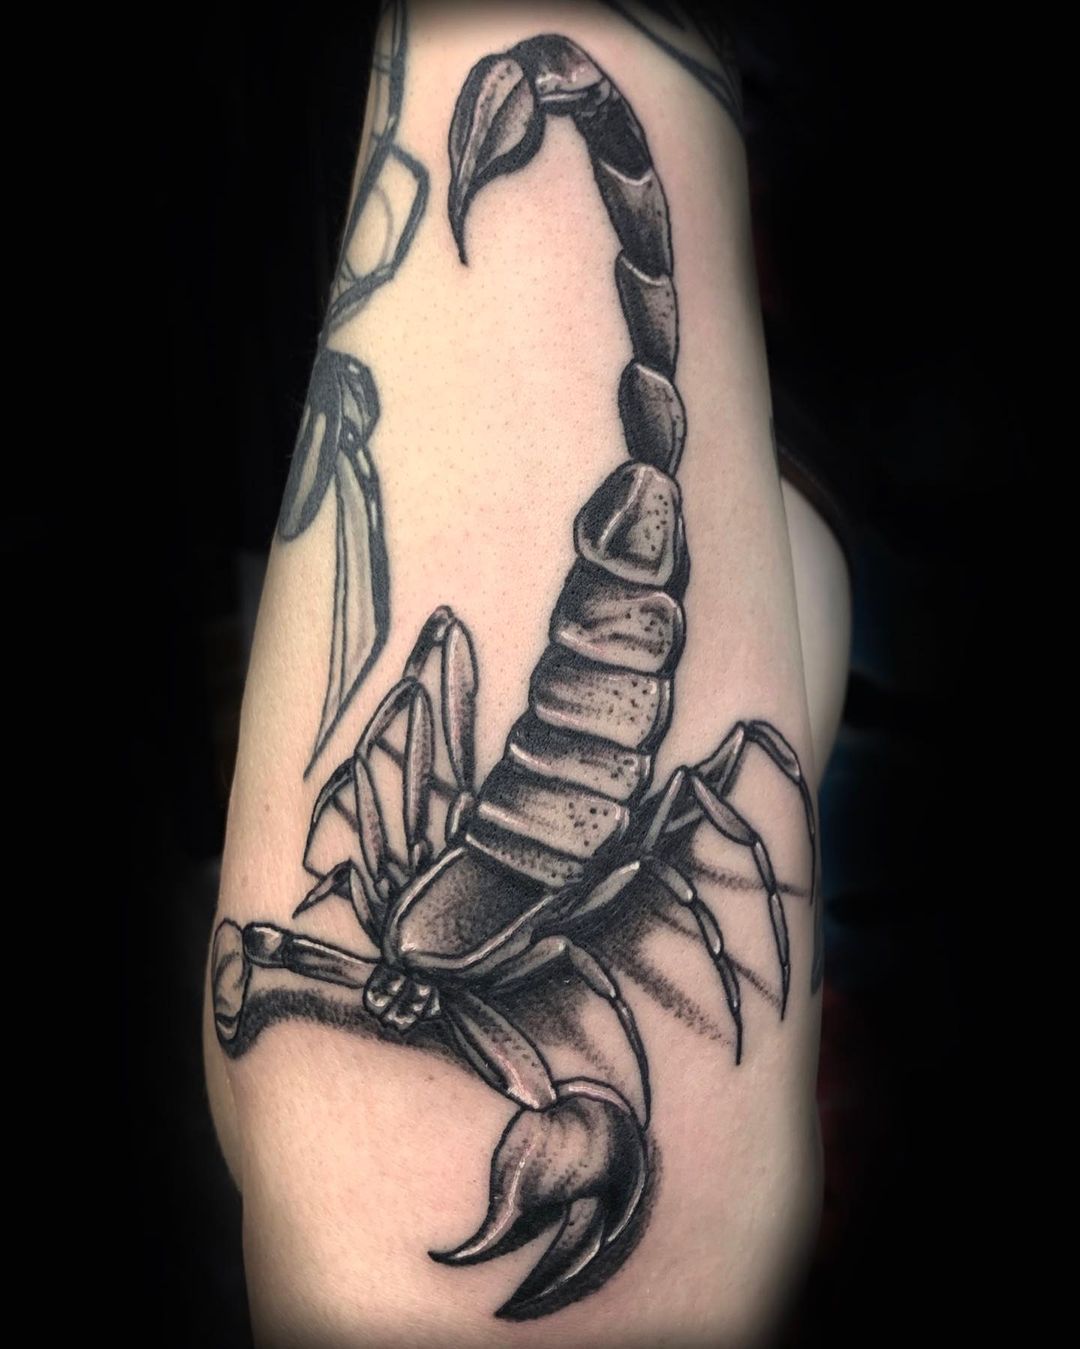 Fresh Flower and Scorpion tattoos... - Forever True Tattoo | Facebook